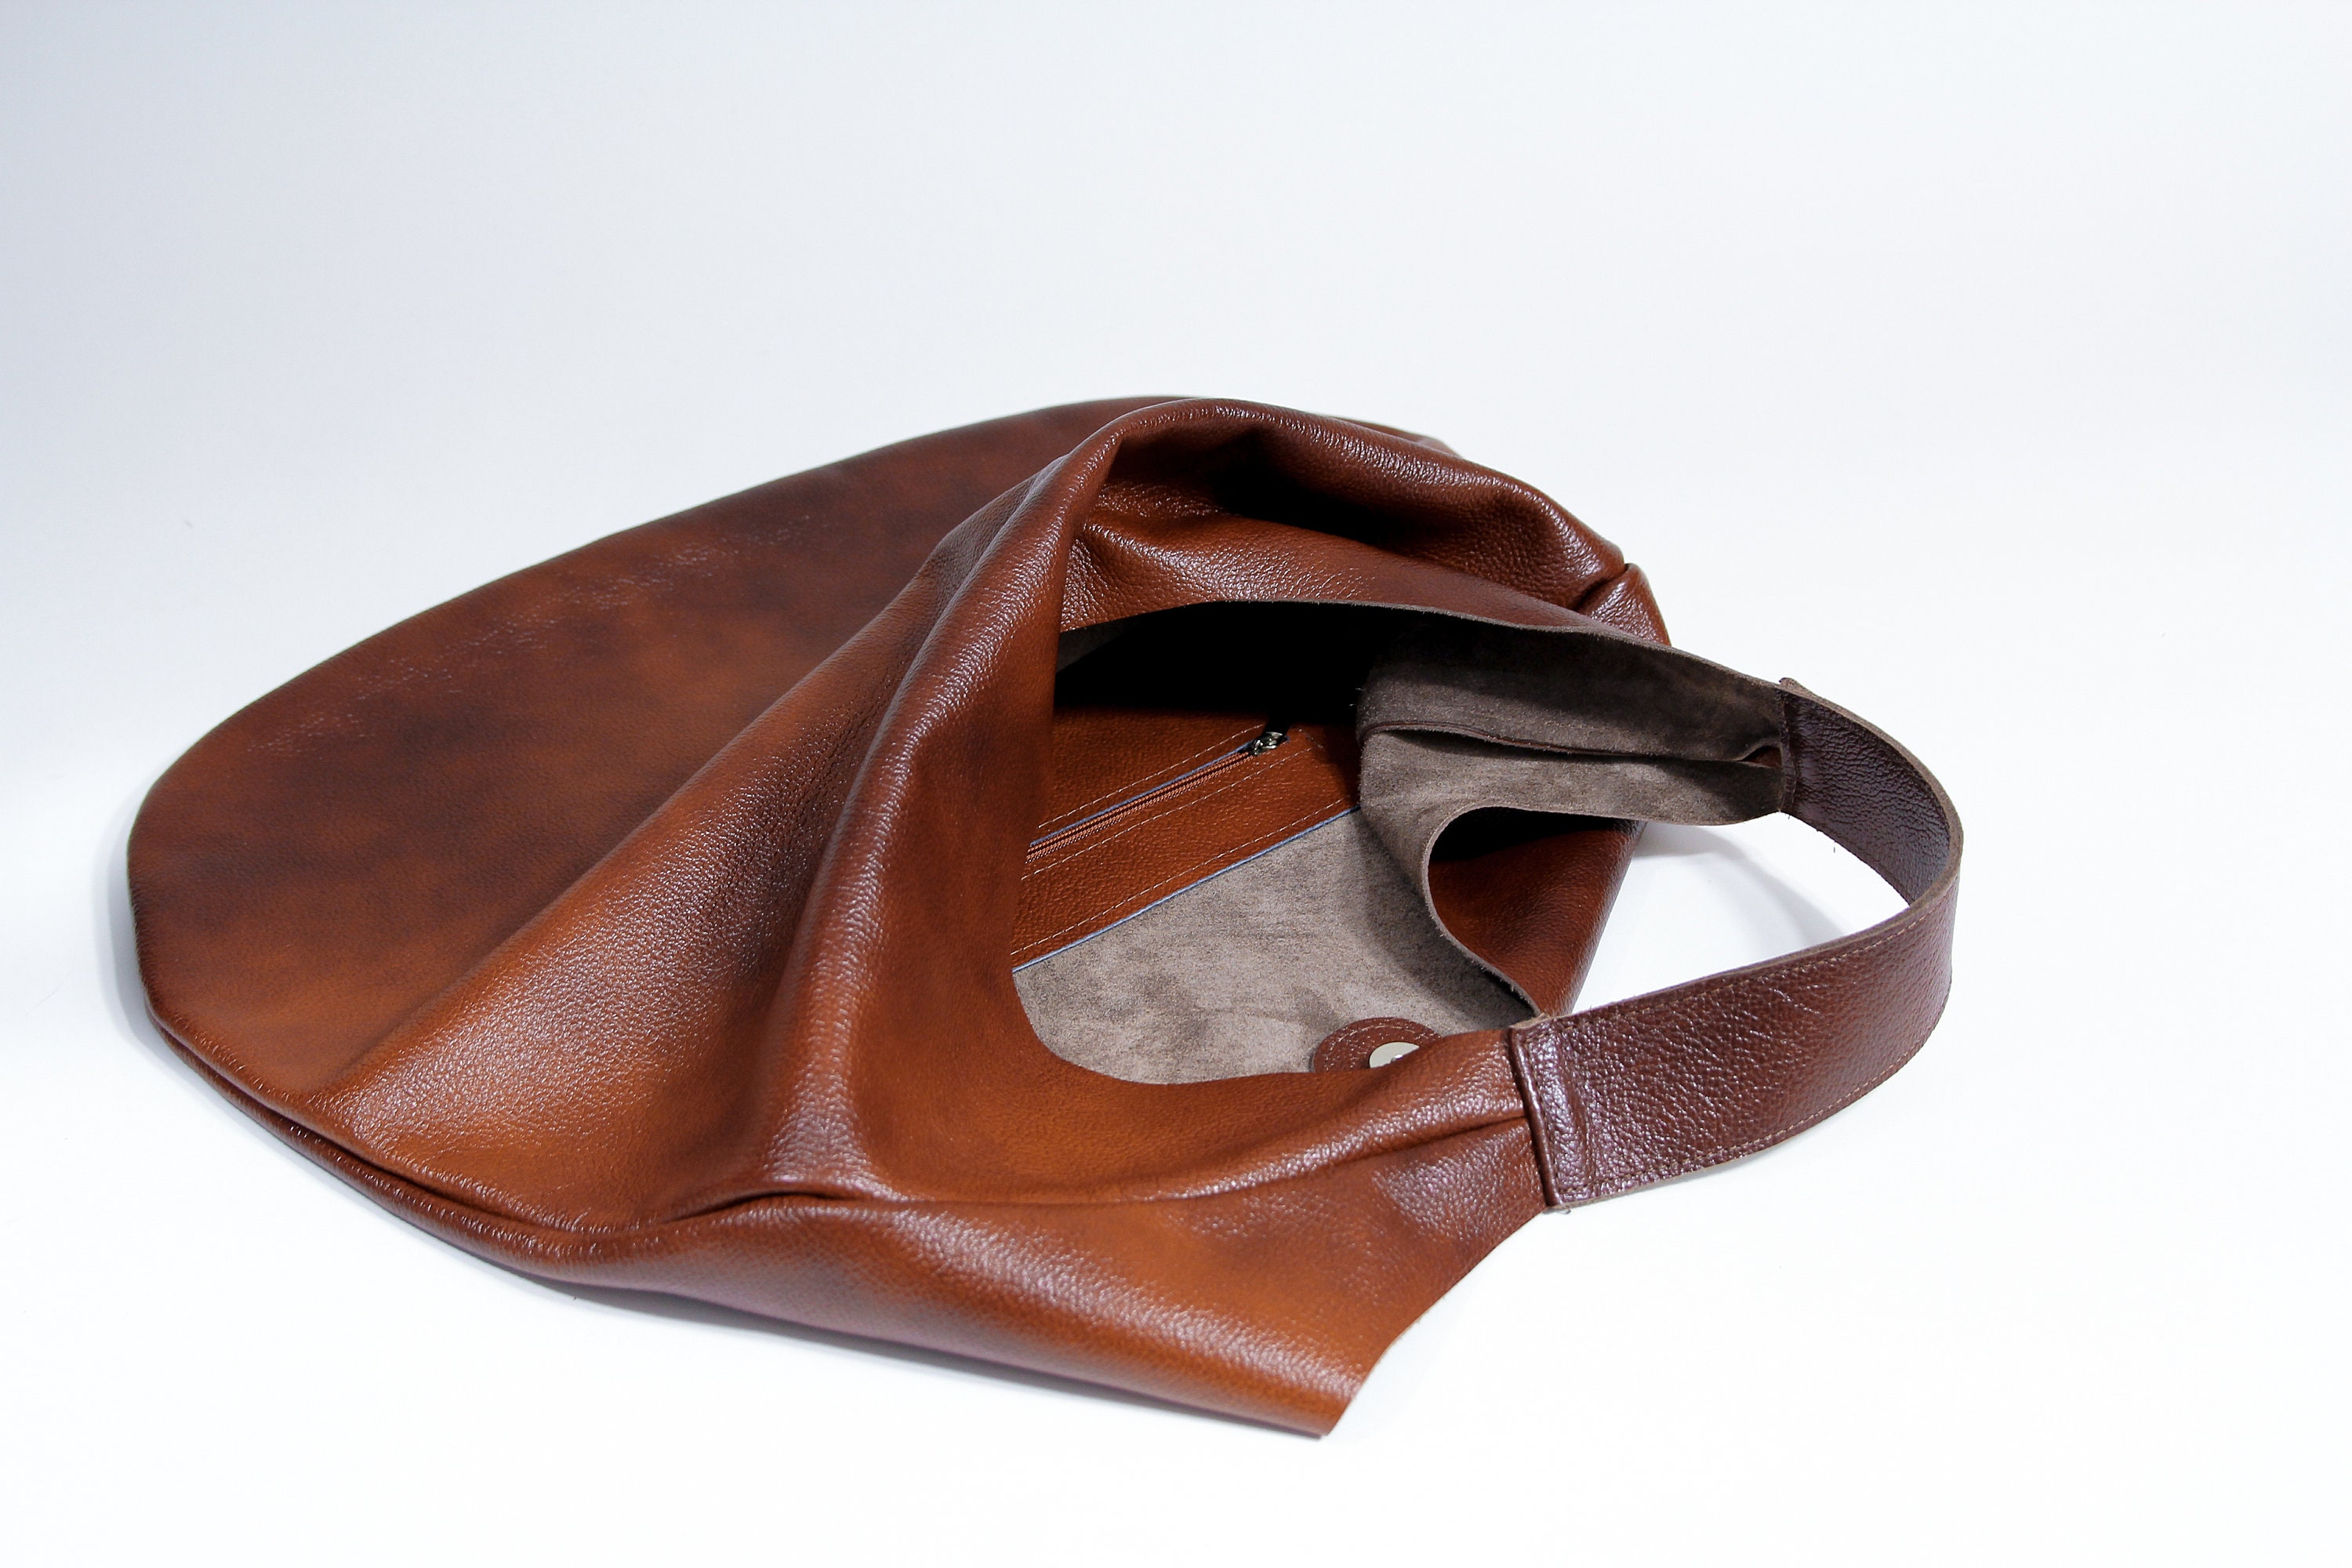 Montanta Leather Hobo Handbag Distressed Cognac Leather 510f